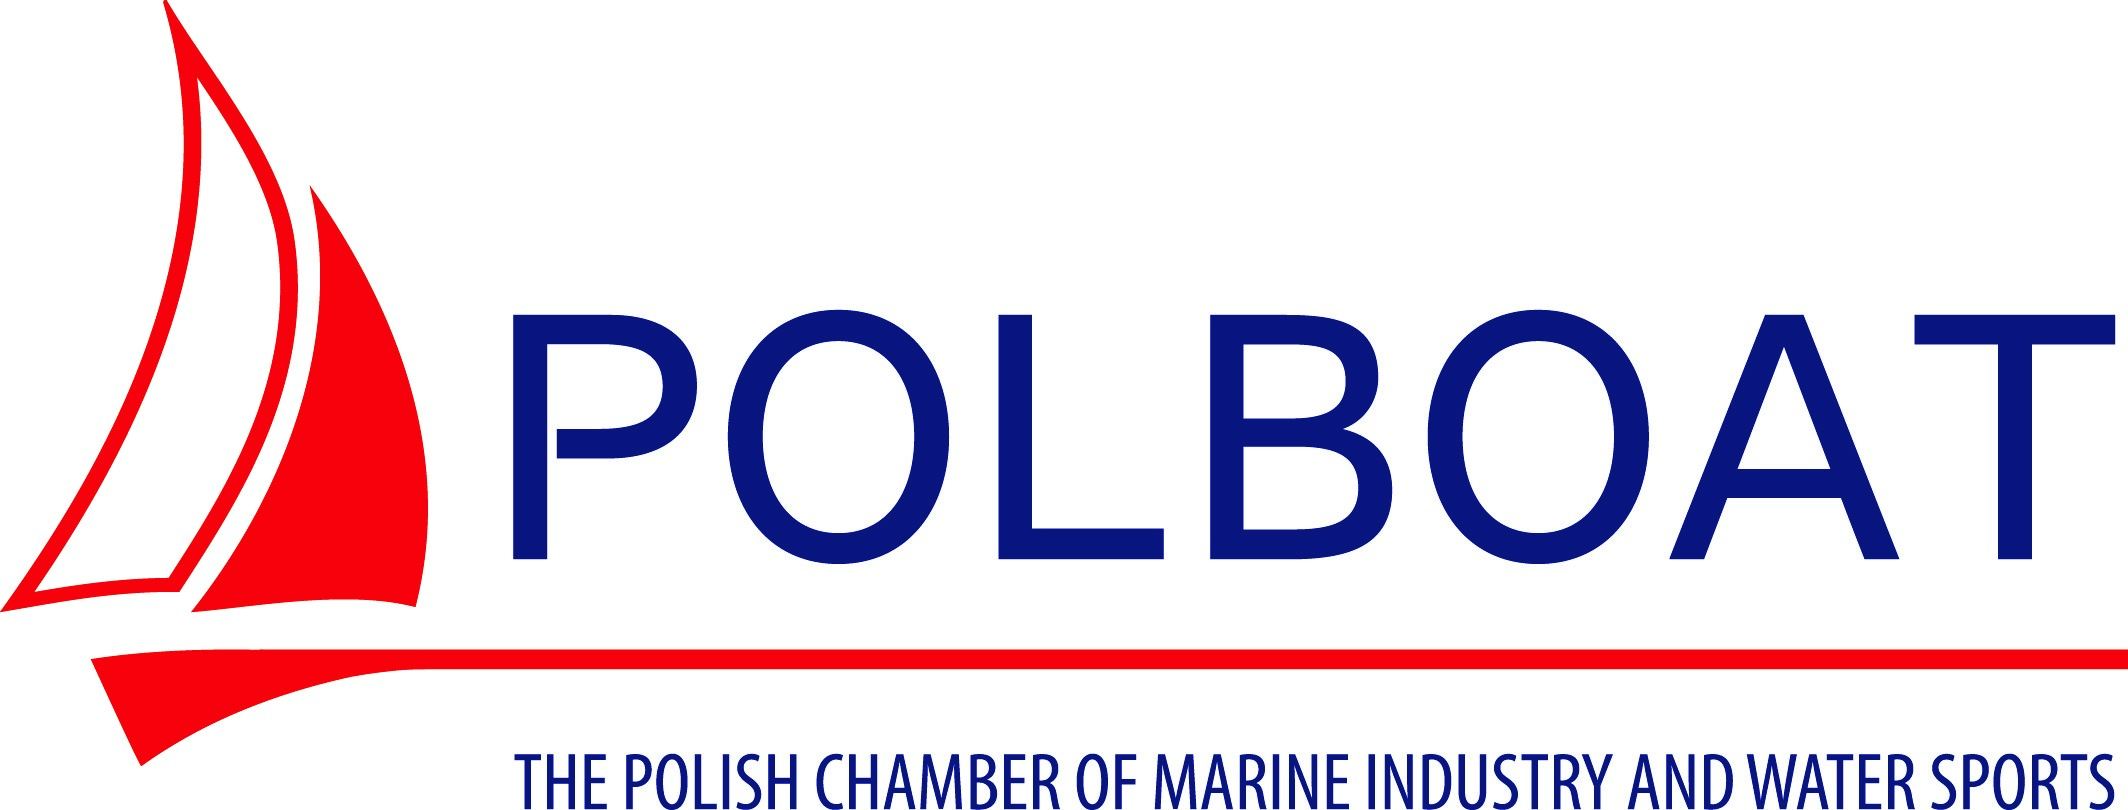 Polboat